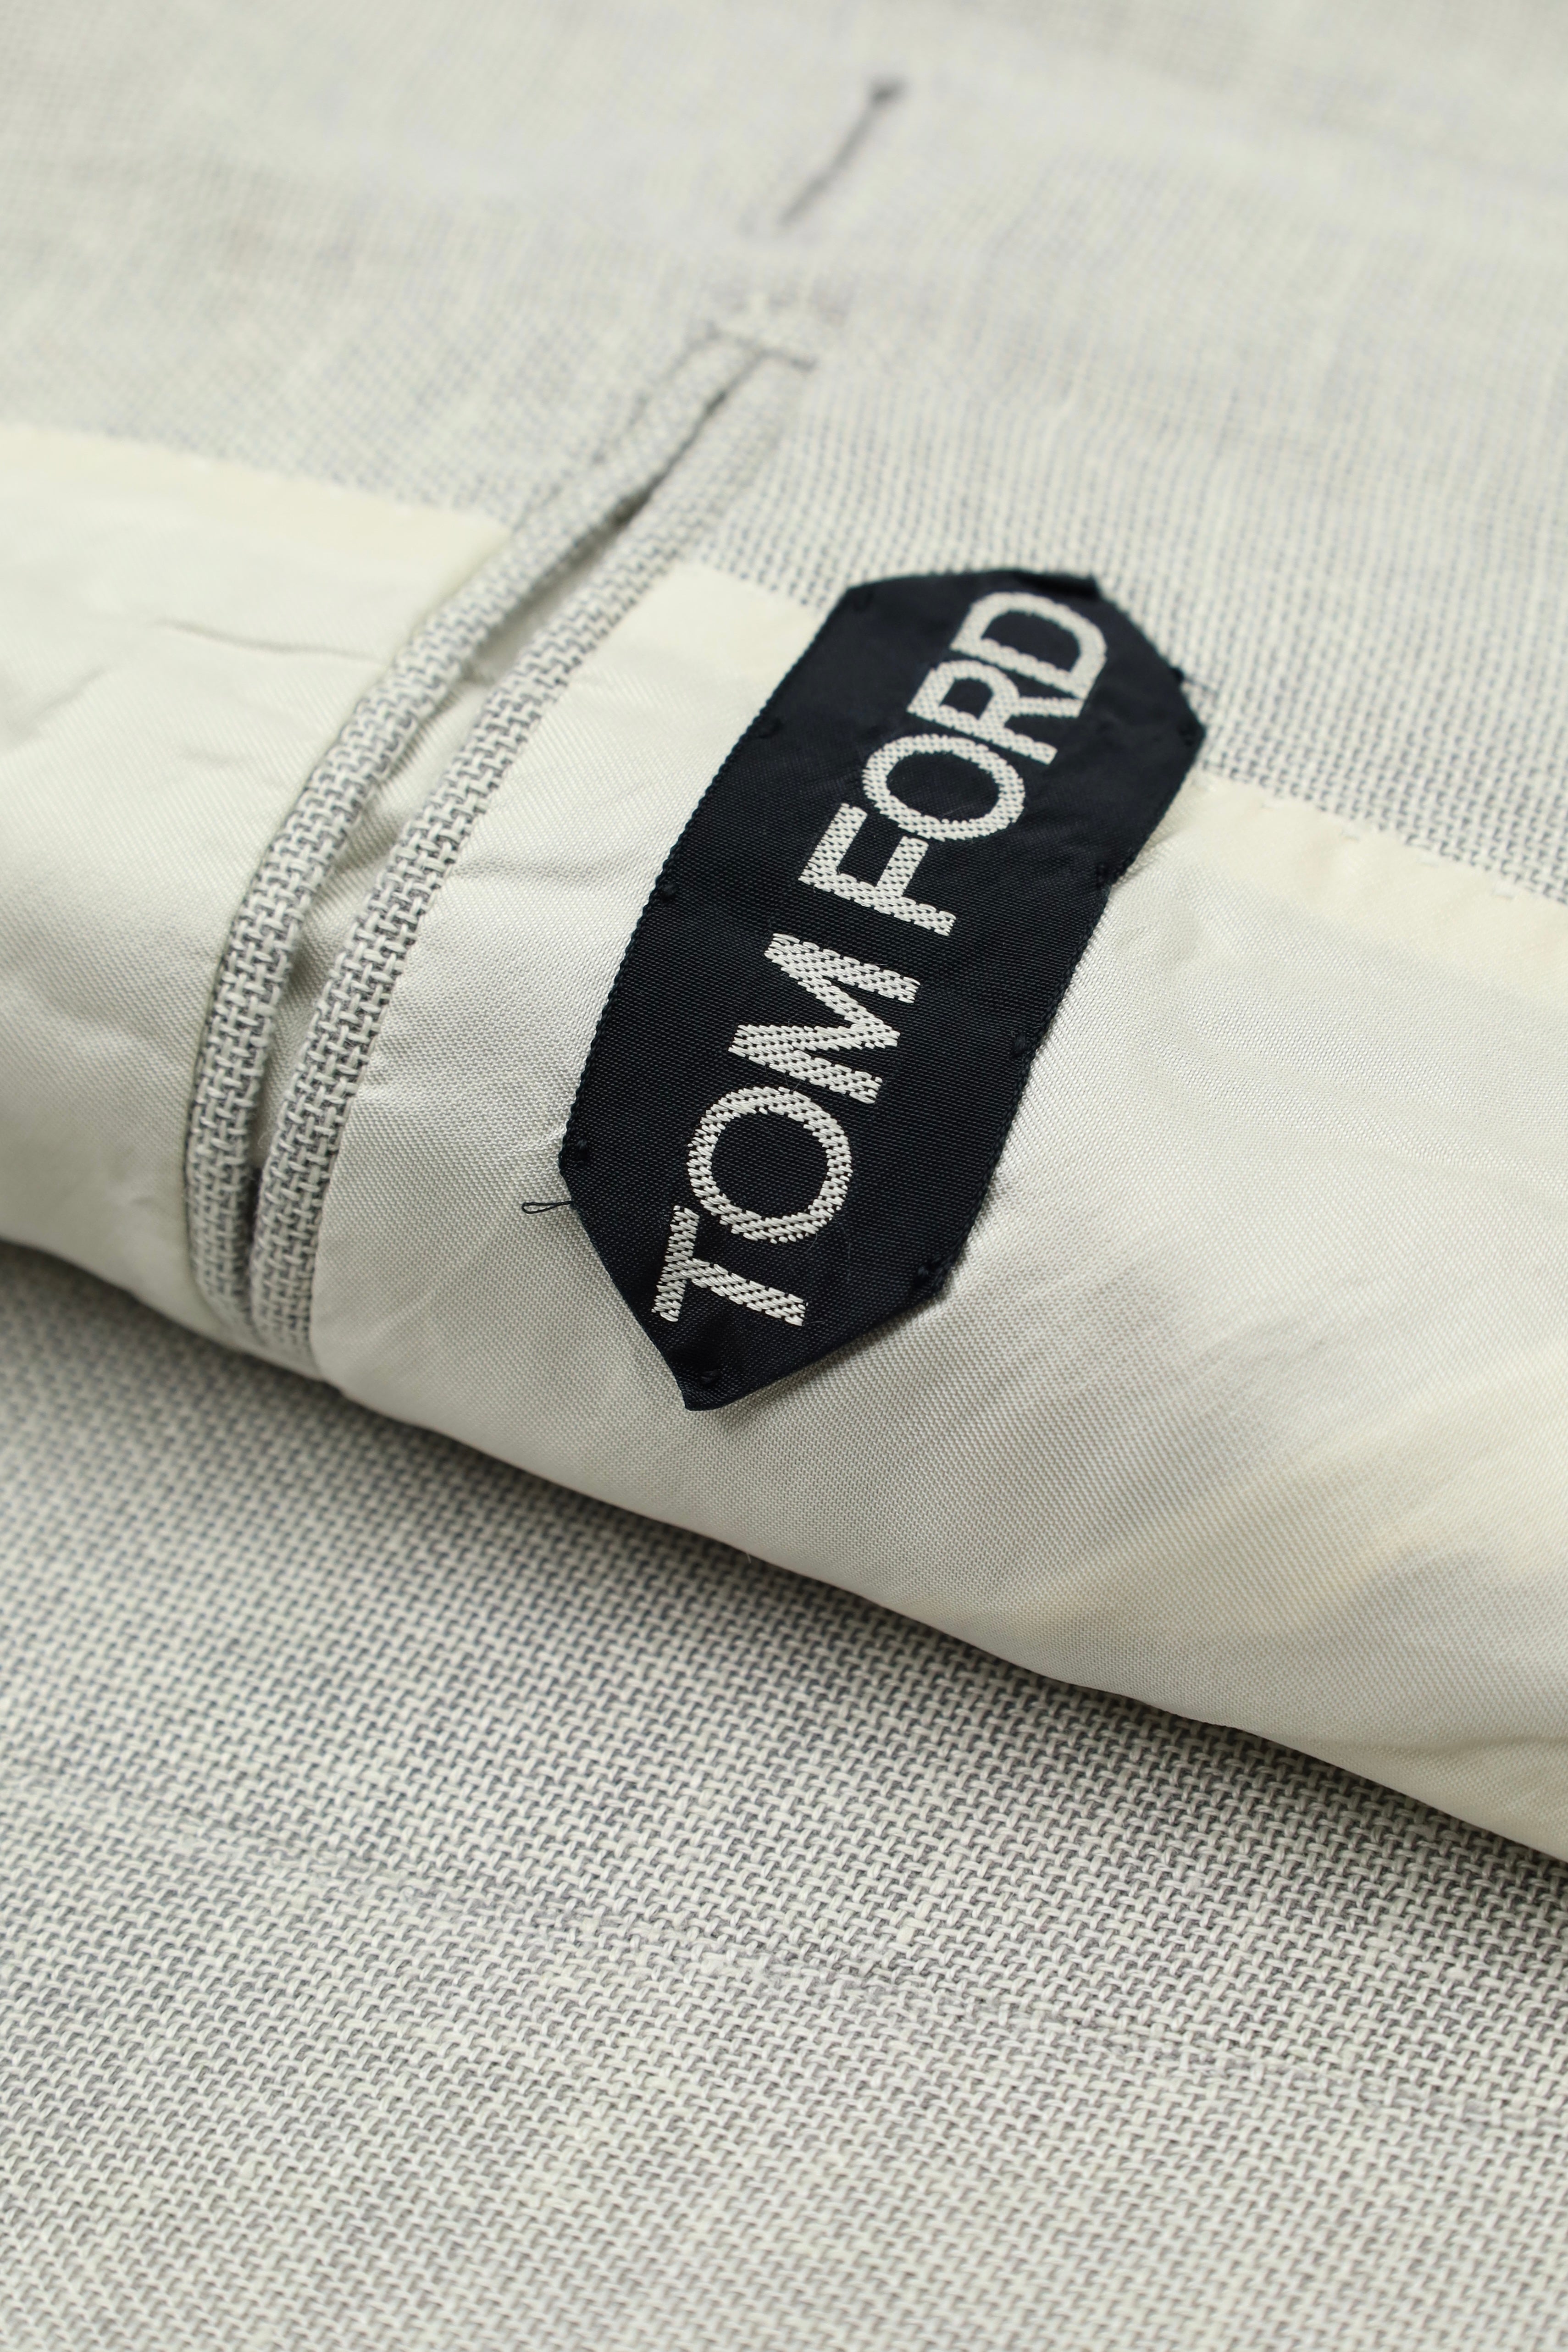 Tom Ford Light Grey Linen, Wool & Mulberry Silk Spencer Jacket